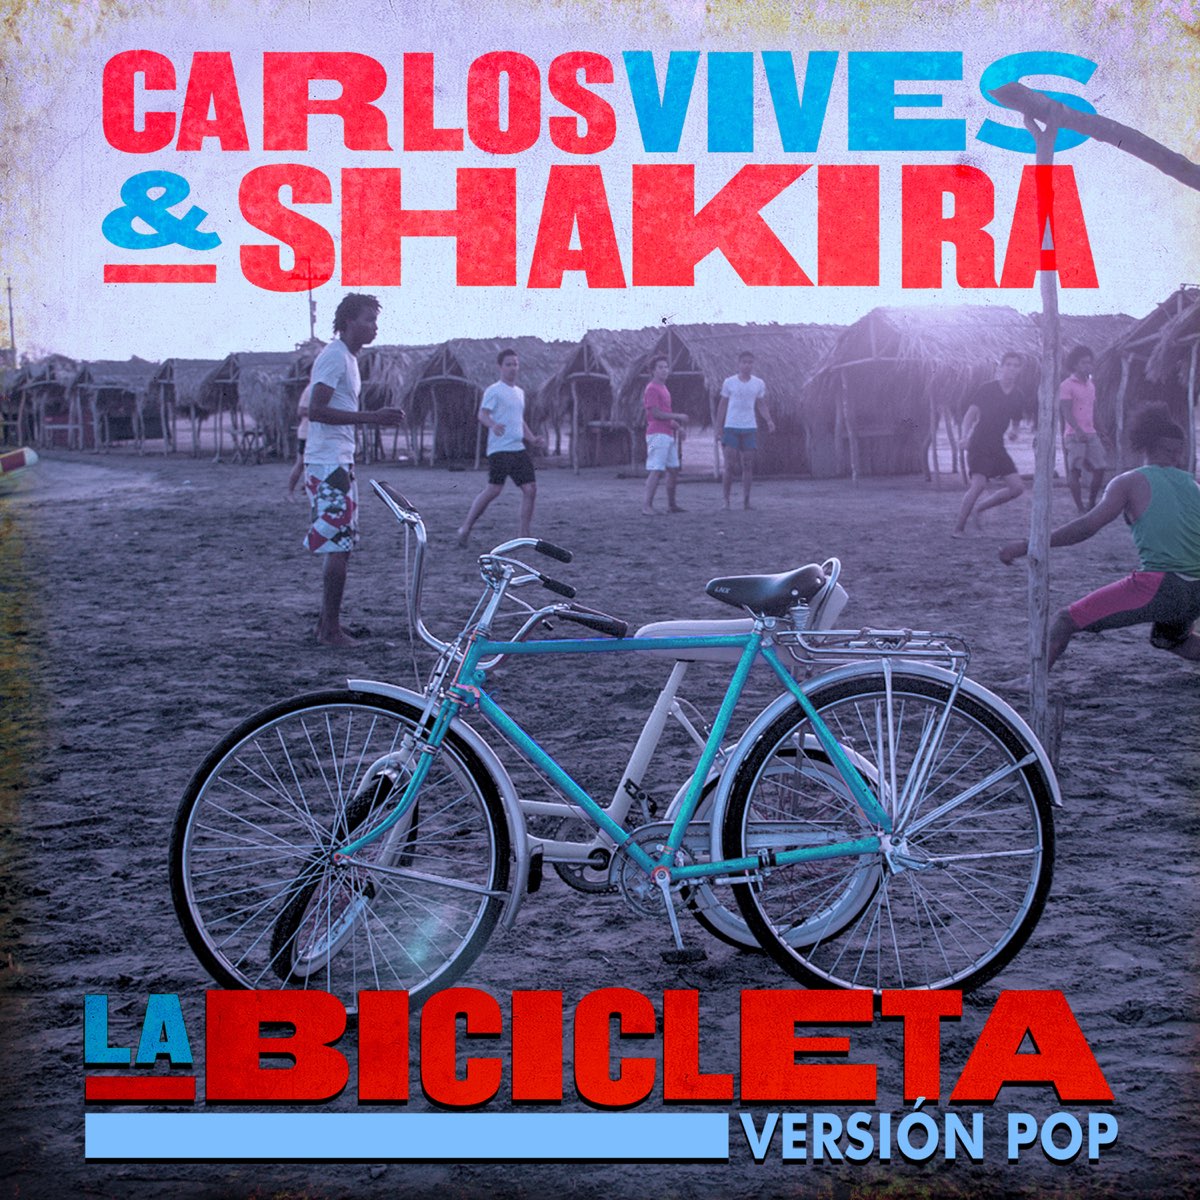 La Bicicleta (Versión Pop) - Single par Carlos Vives & Shakira sur Apple  Music